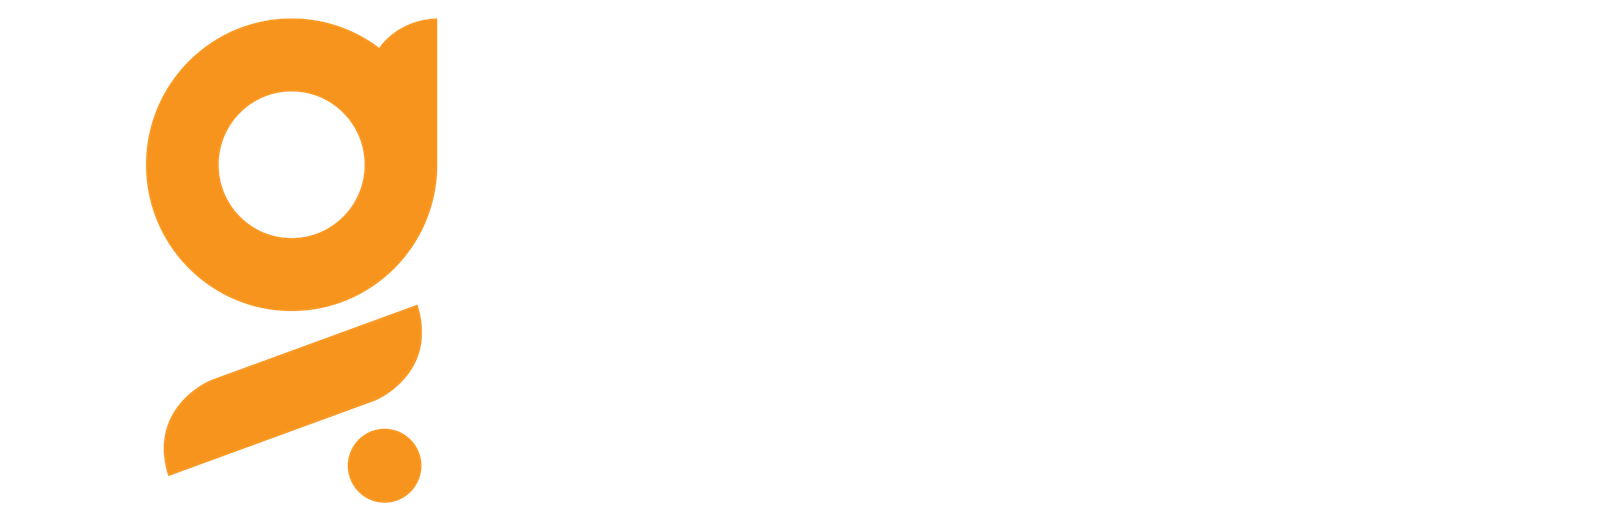 Ganita Media - De